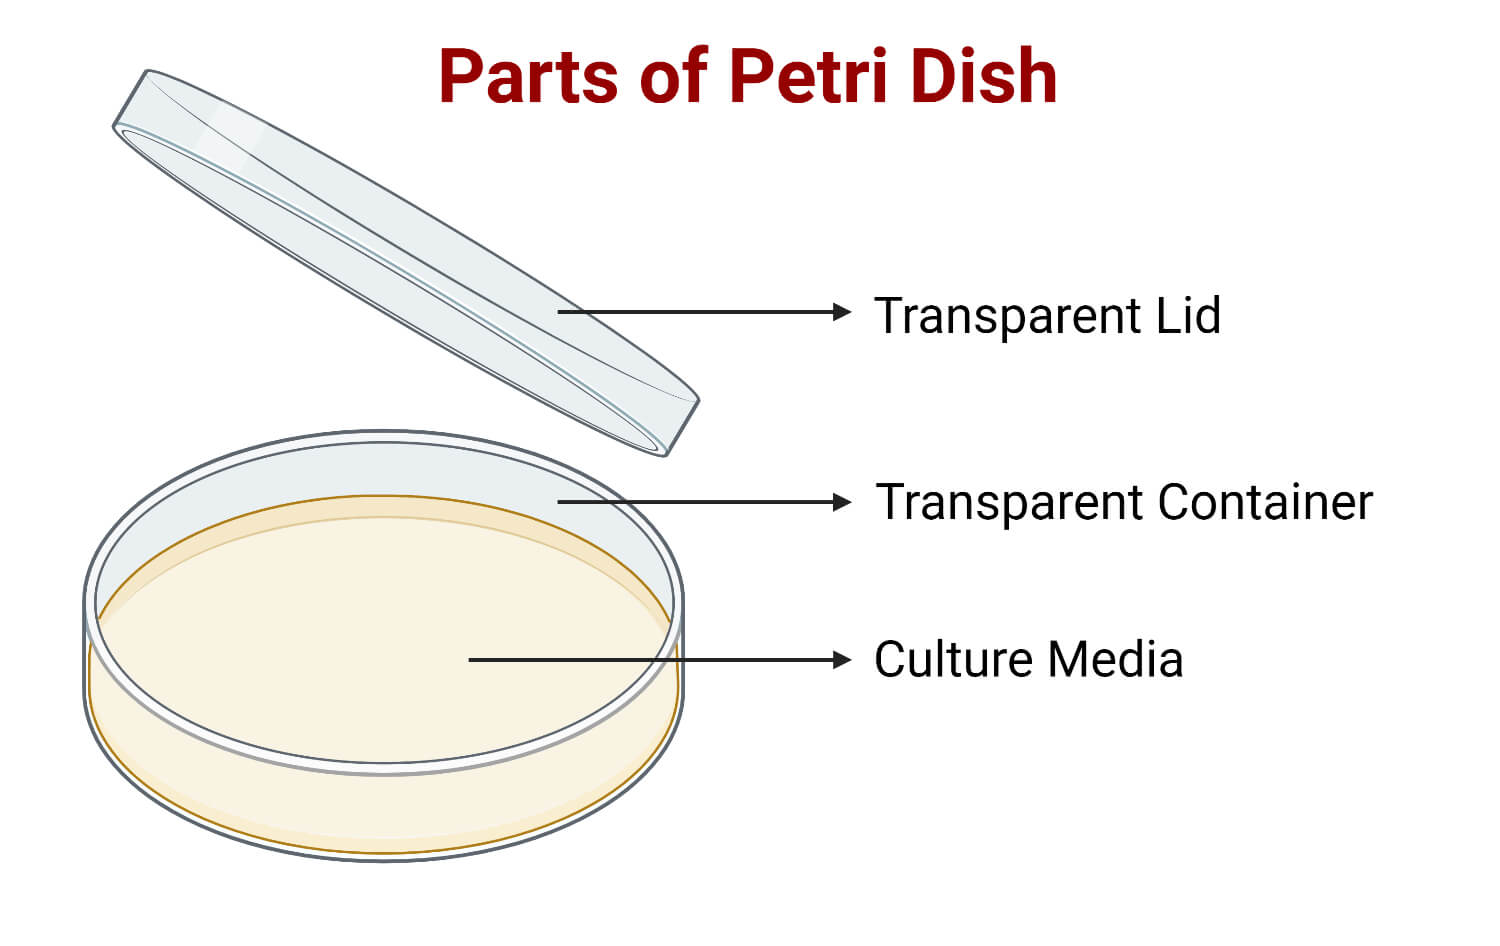 Parts of Petri Dish